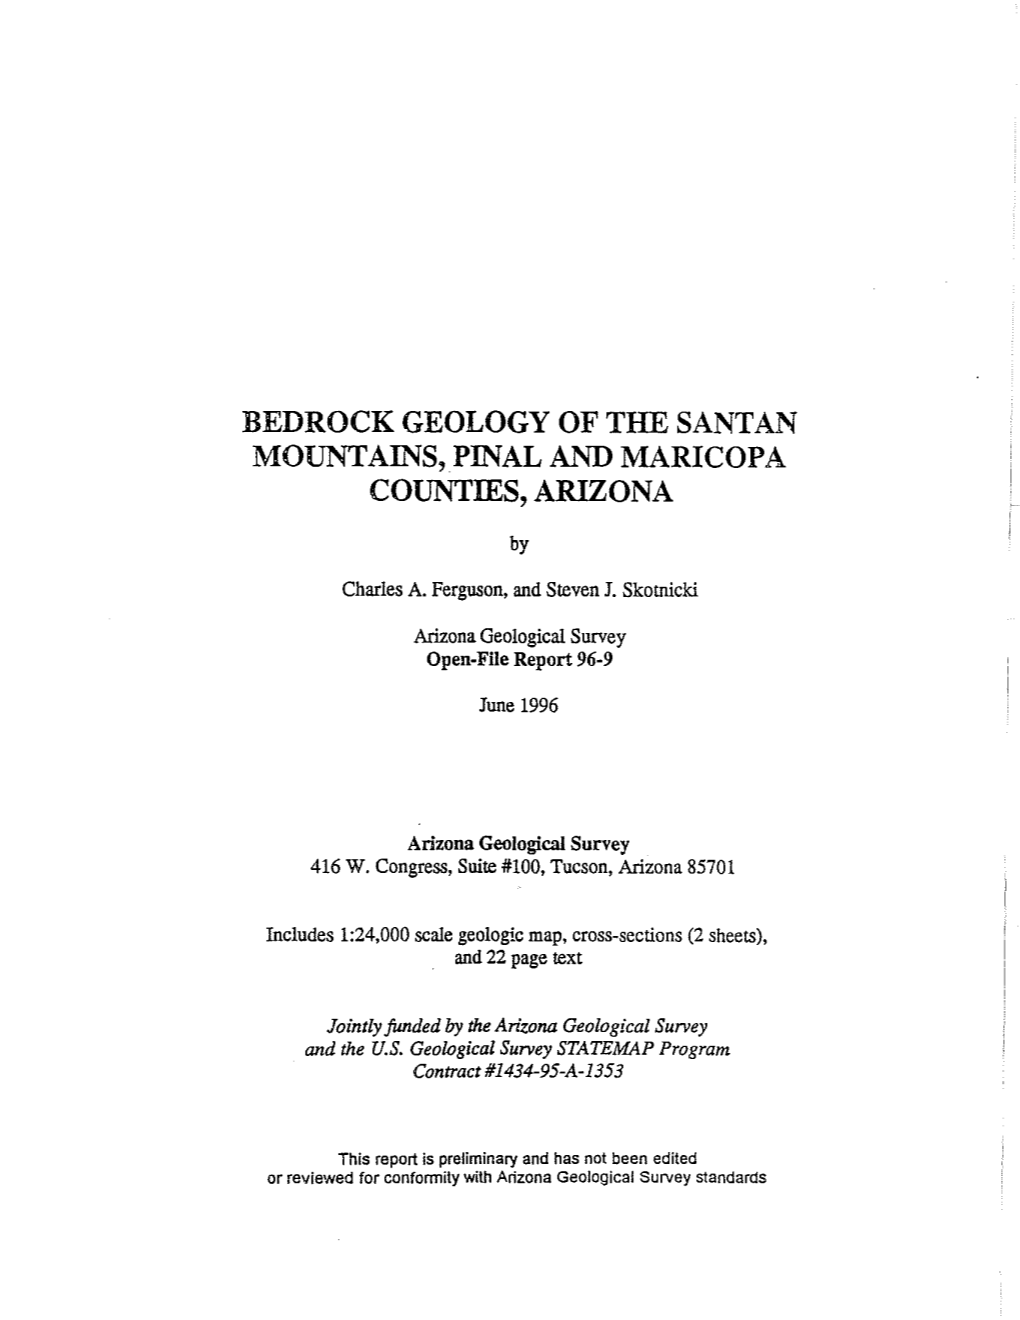 Bedrock Geology of the Santan Mountains, Pinal and Maricopa